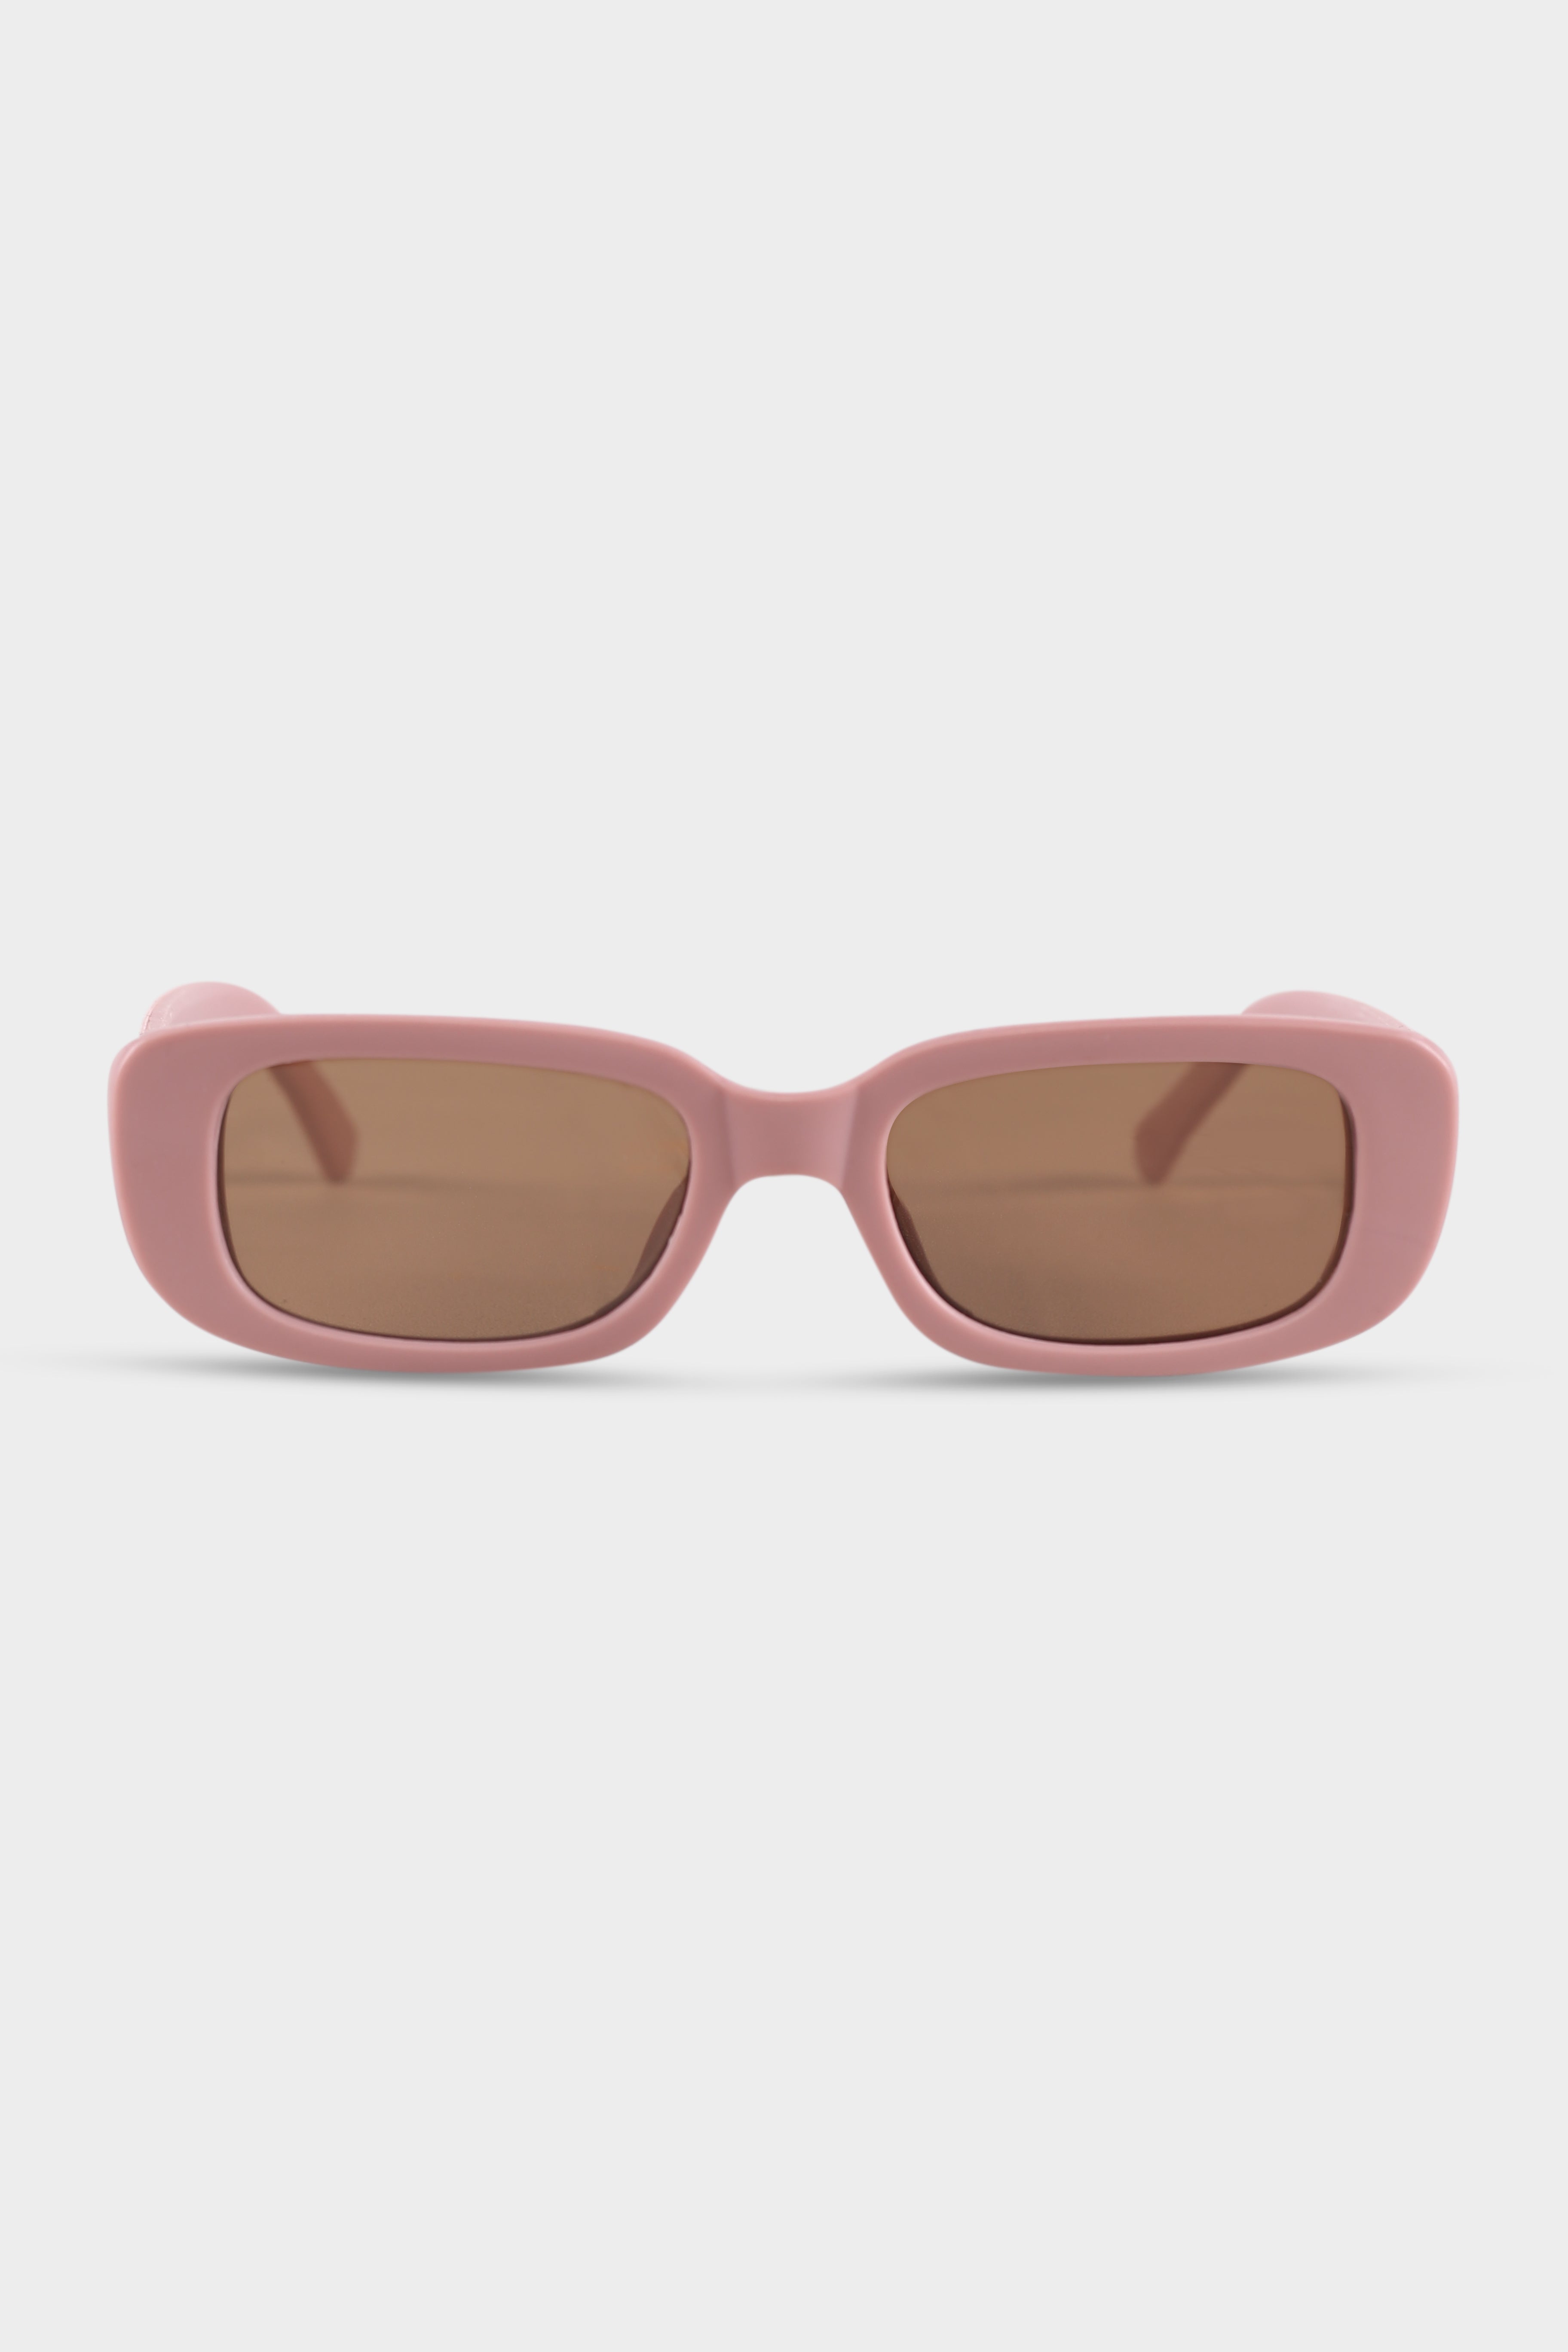 Sixth Avenue Sunglasses Pink Velvet